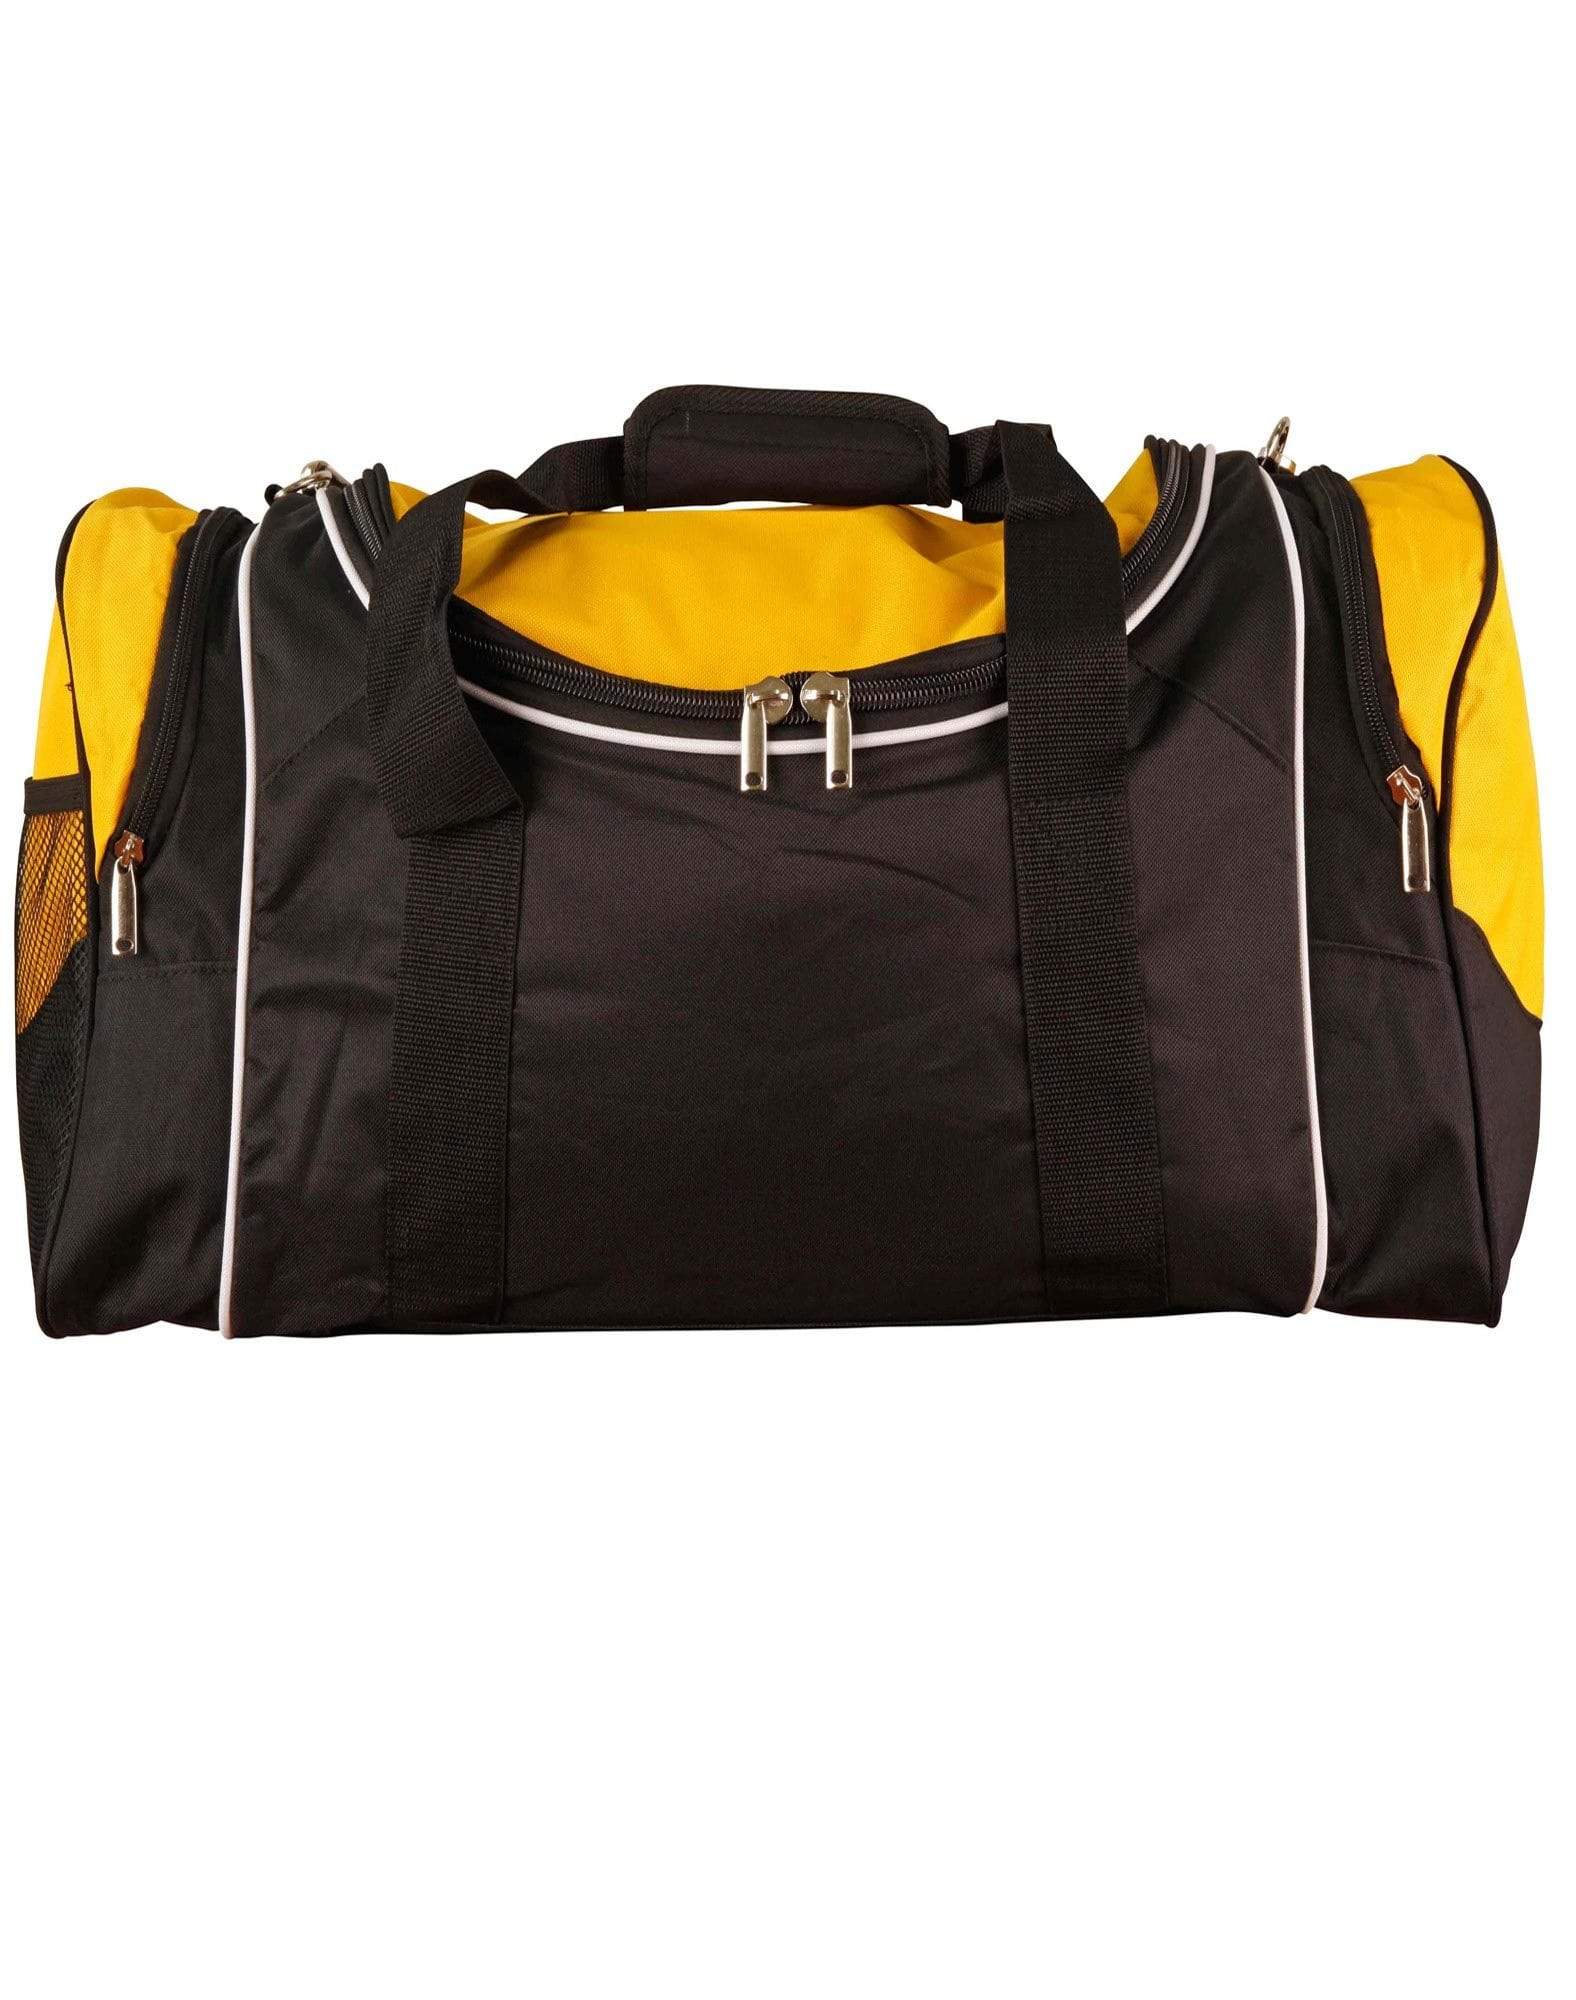 Winner Sports/ Travel Bag B2020 Active Wear Winning Spirit Black/White/Gold "(w)65cm x (h)32cm x (d)27cm, 56.2 Litres Capacity" 